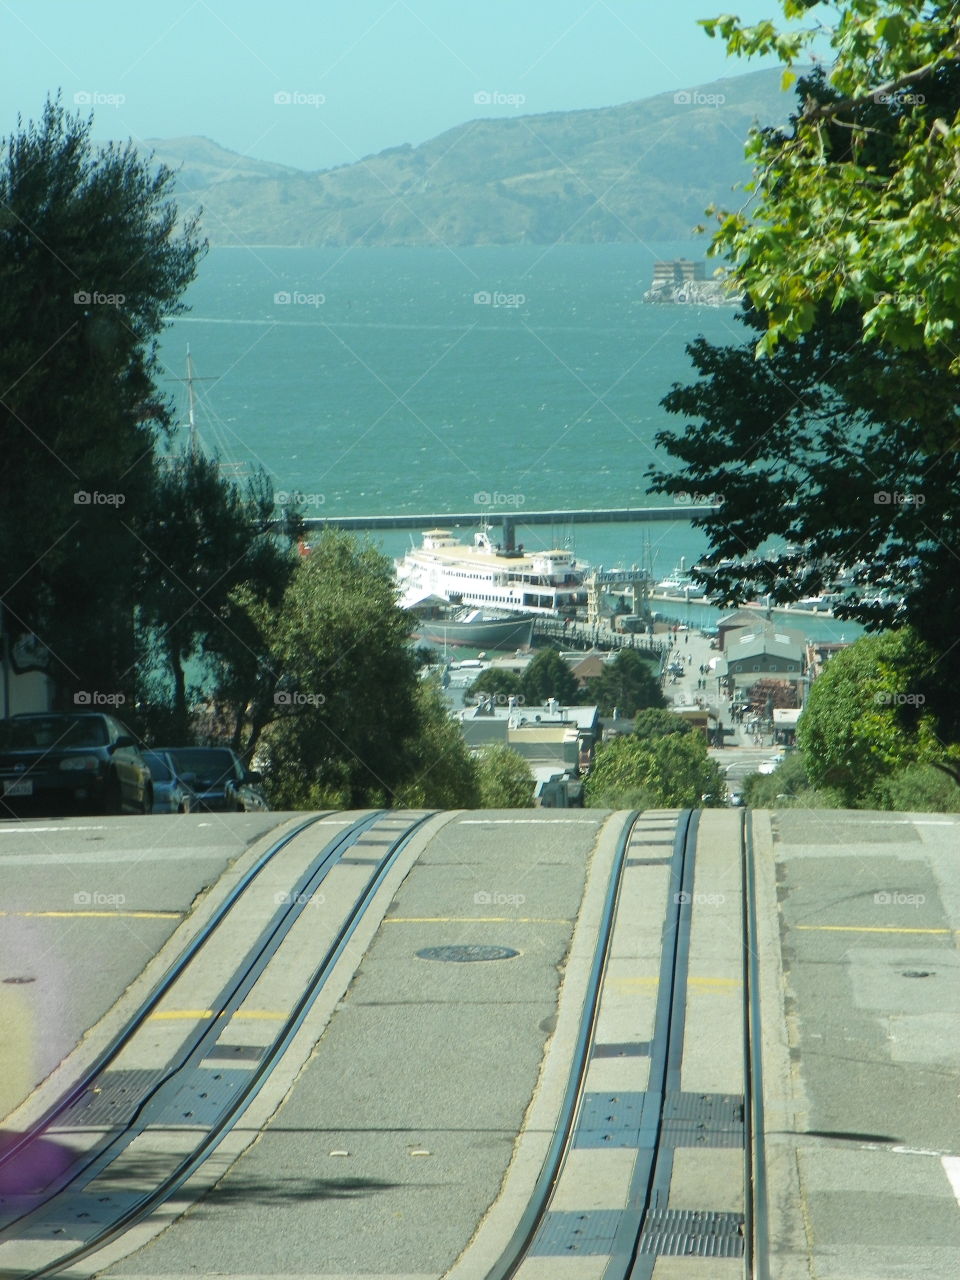 San Francisco CA - street view 